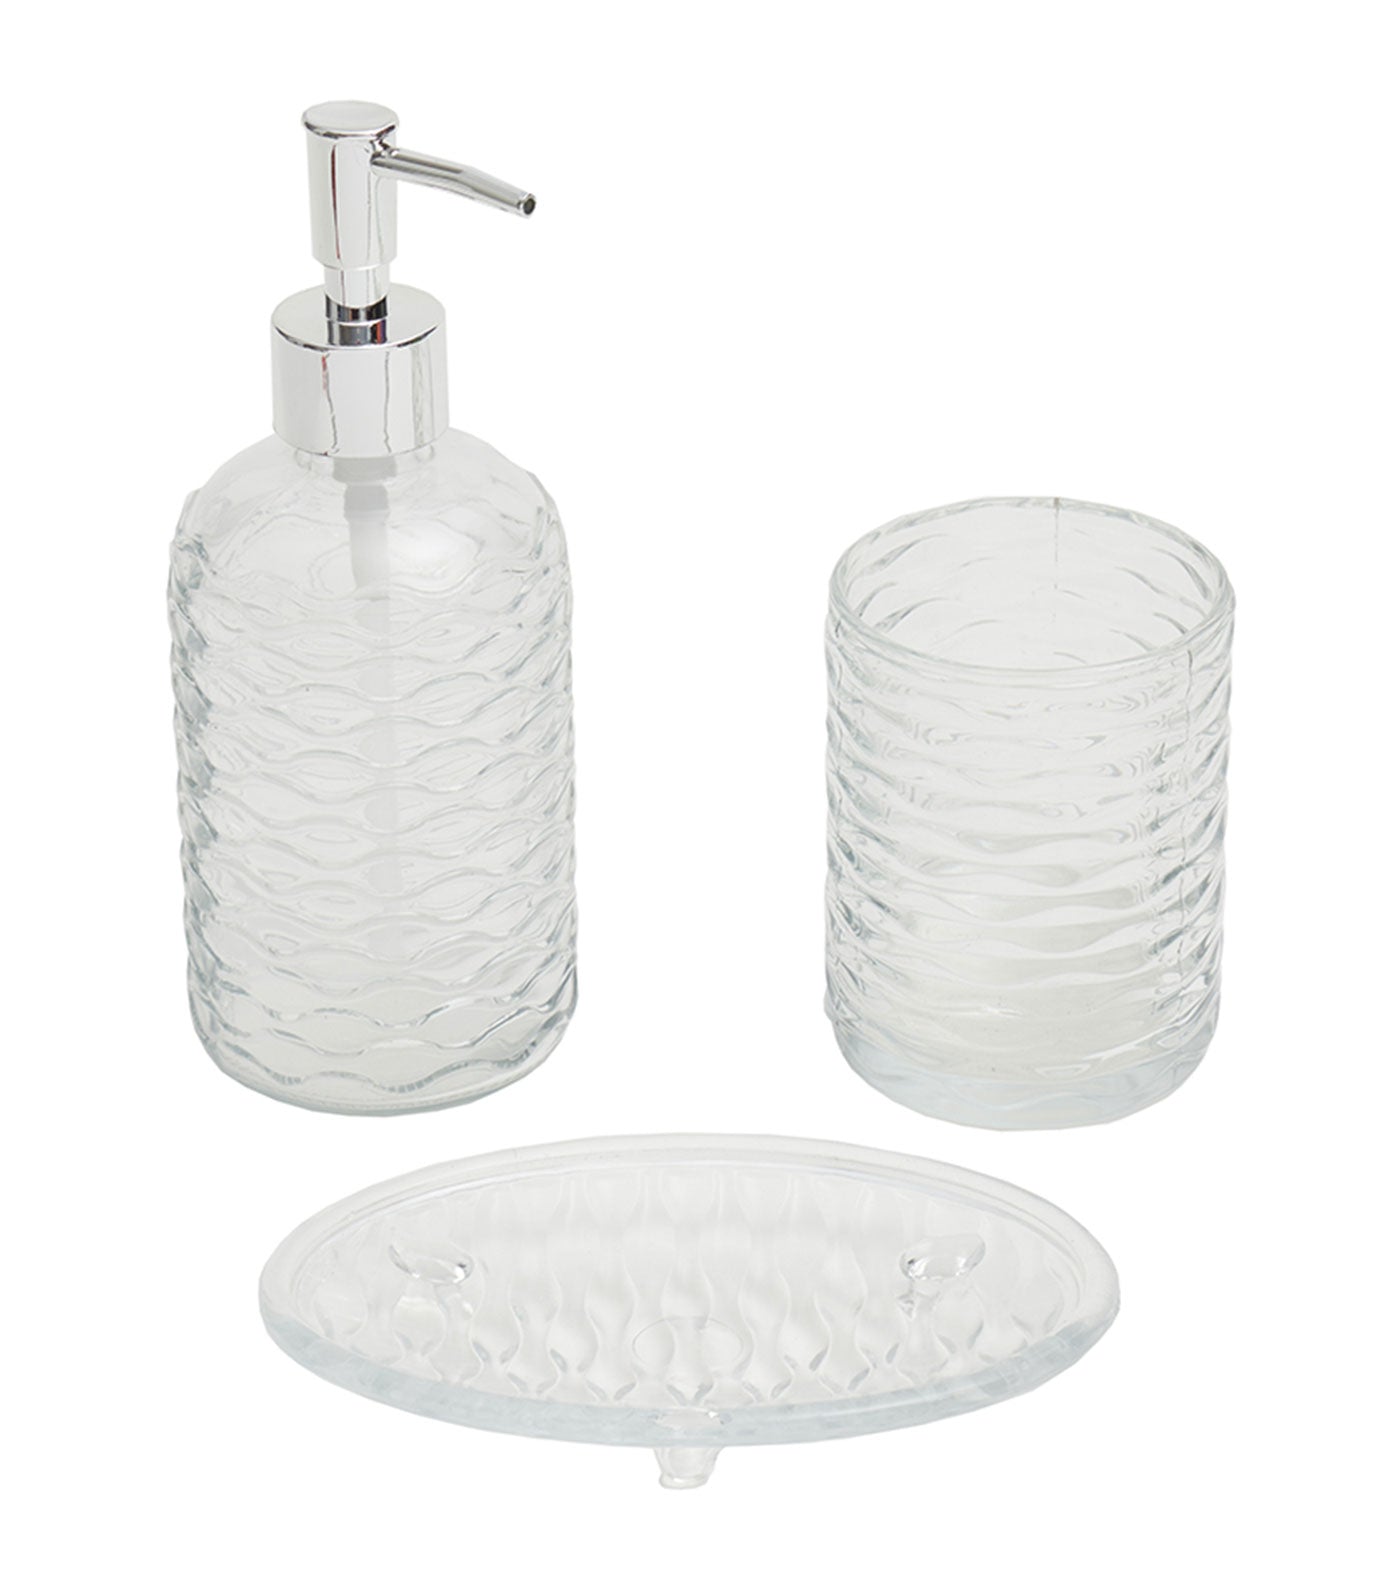 MakeRoom Rippled 3-Piece Glass Bathroom Accessories Set